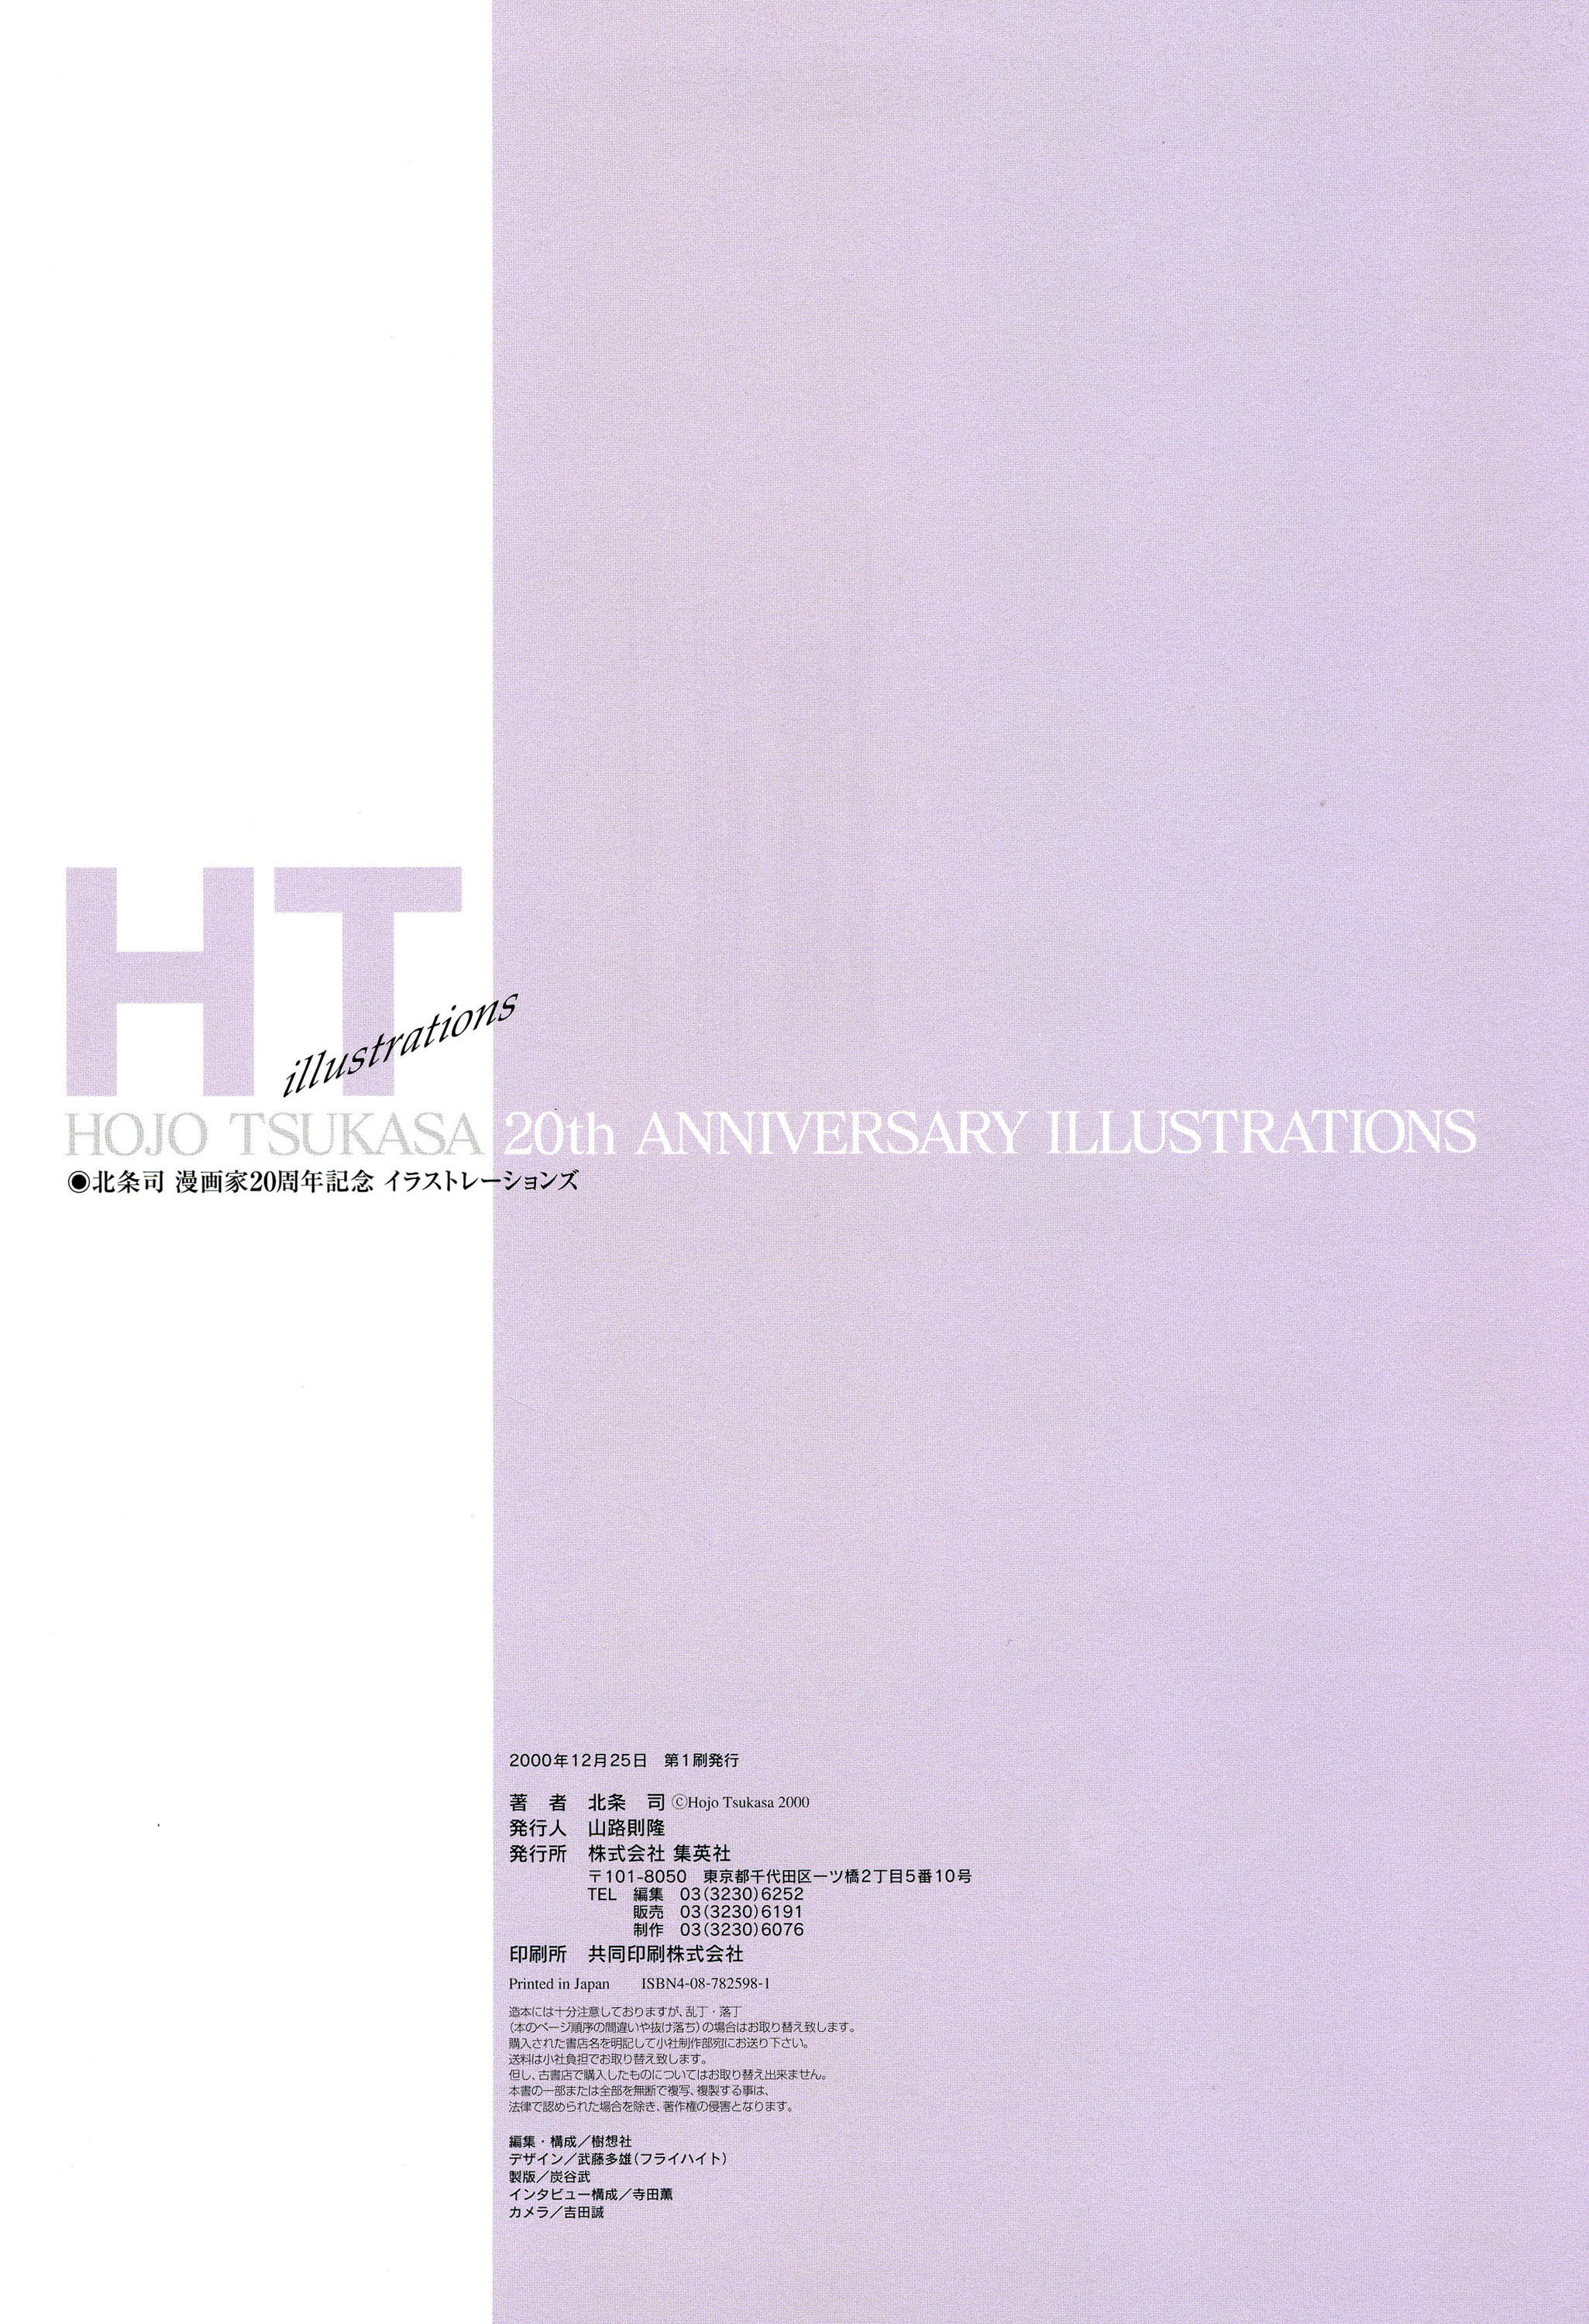 Hojo_20th_anniversary_p108.jpg